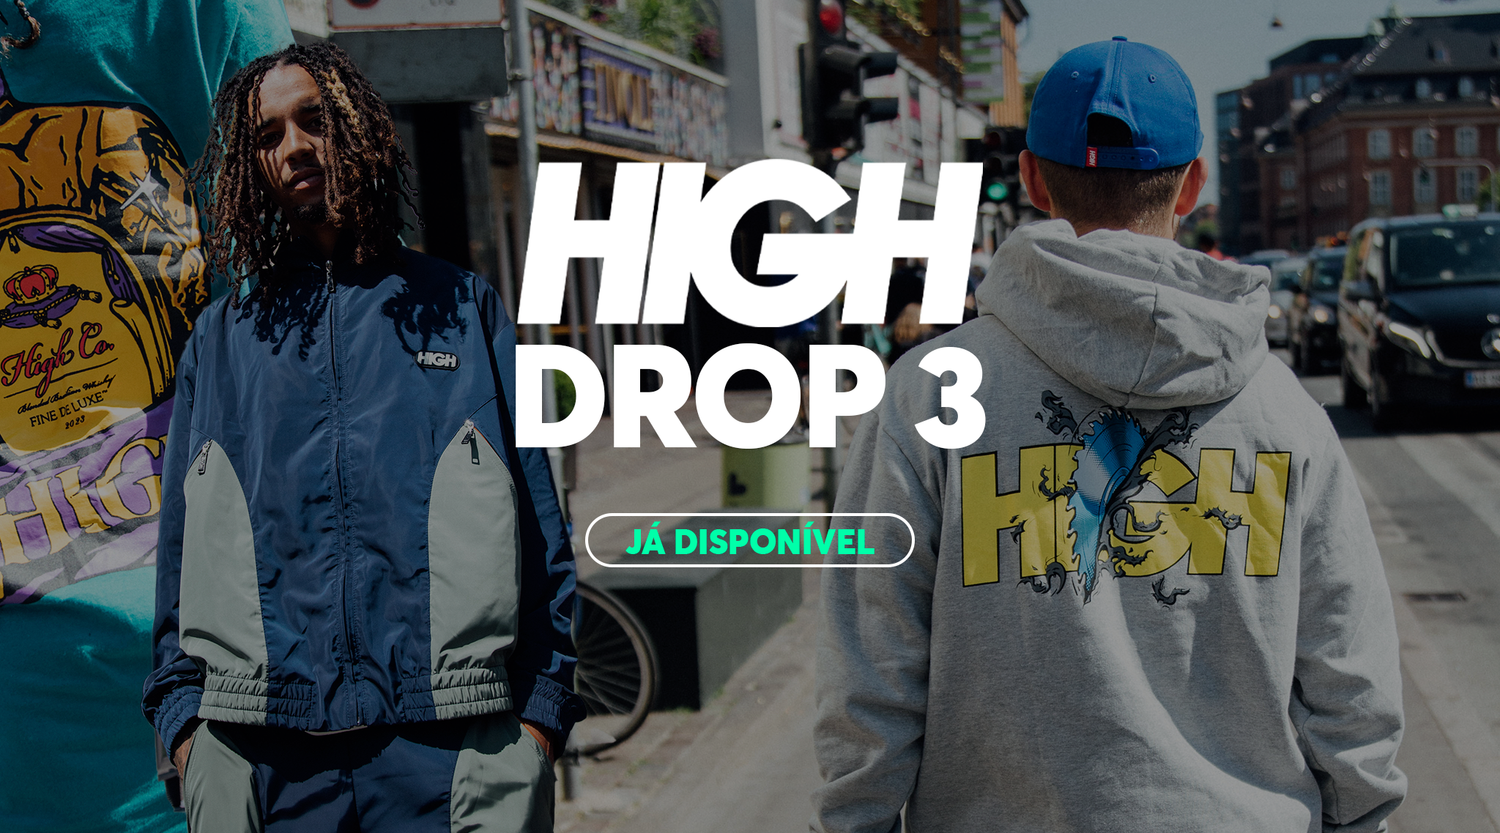 HIGH - DROP 3